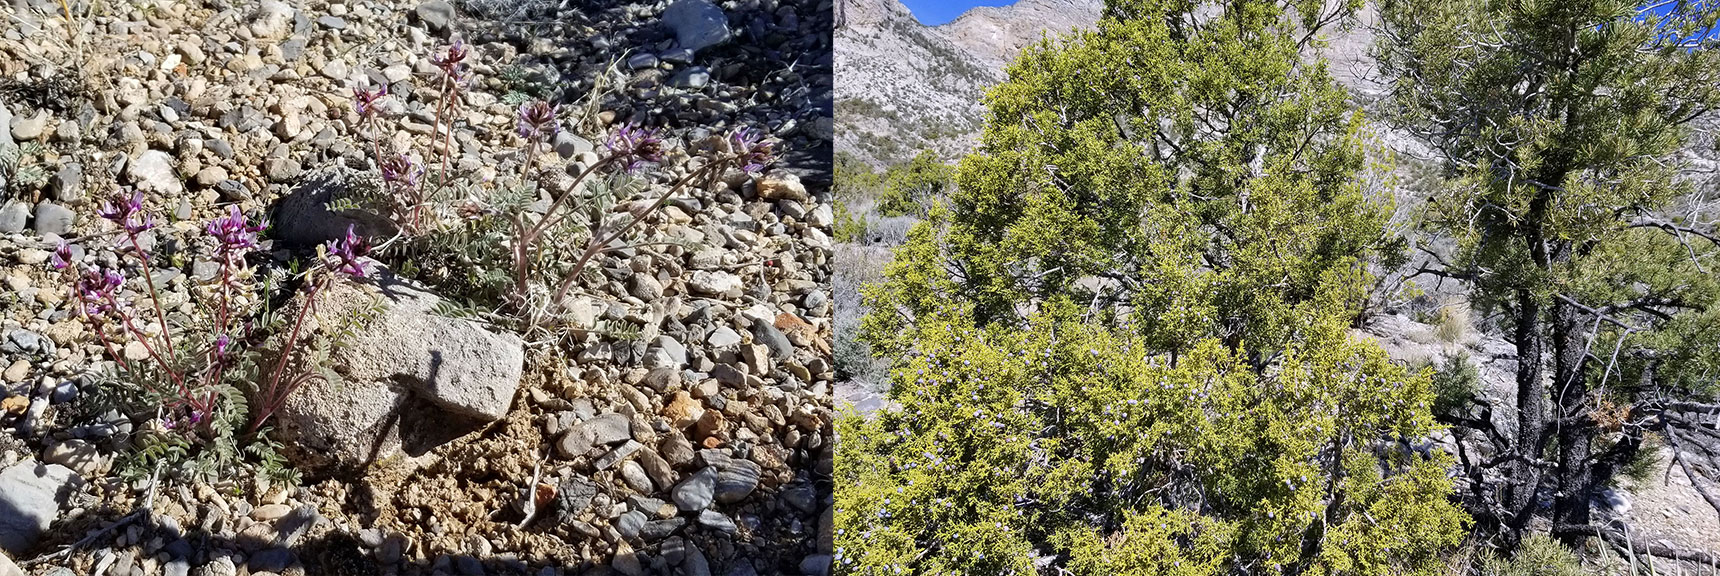 Pine, Juniper and Flower in Calico Basin, Nevada